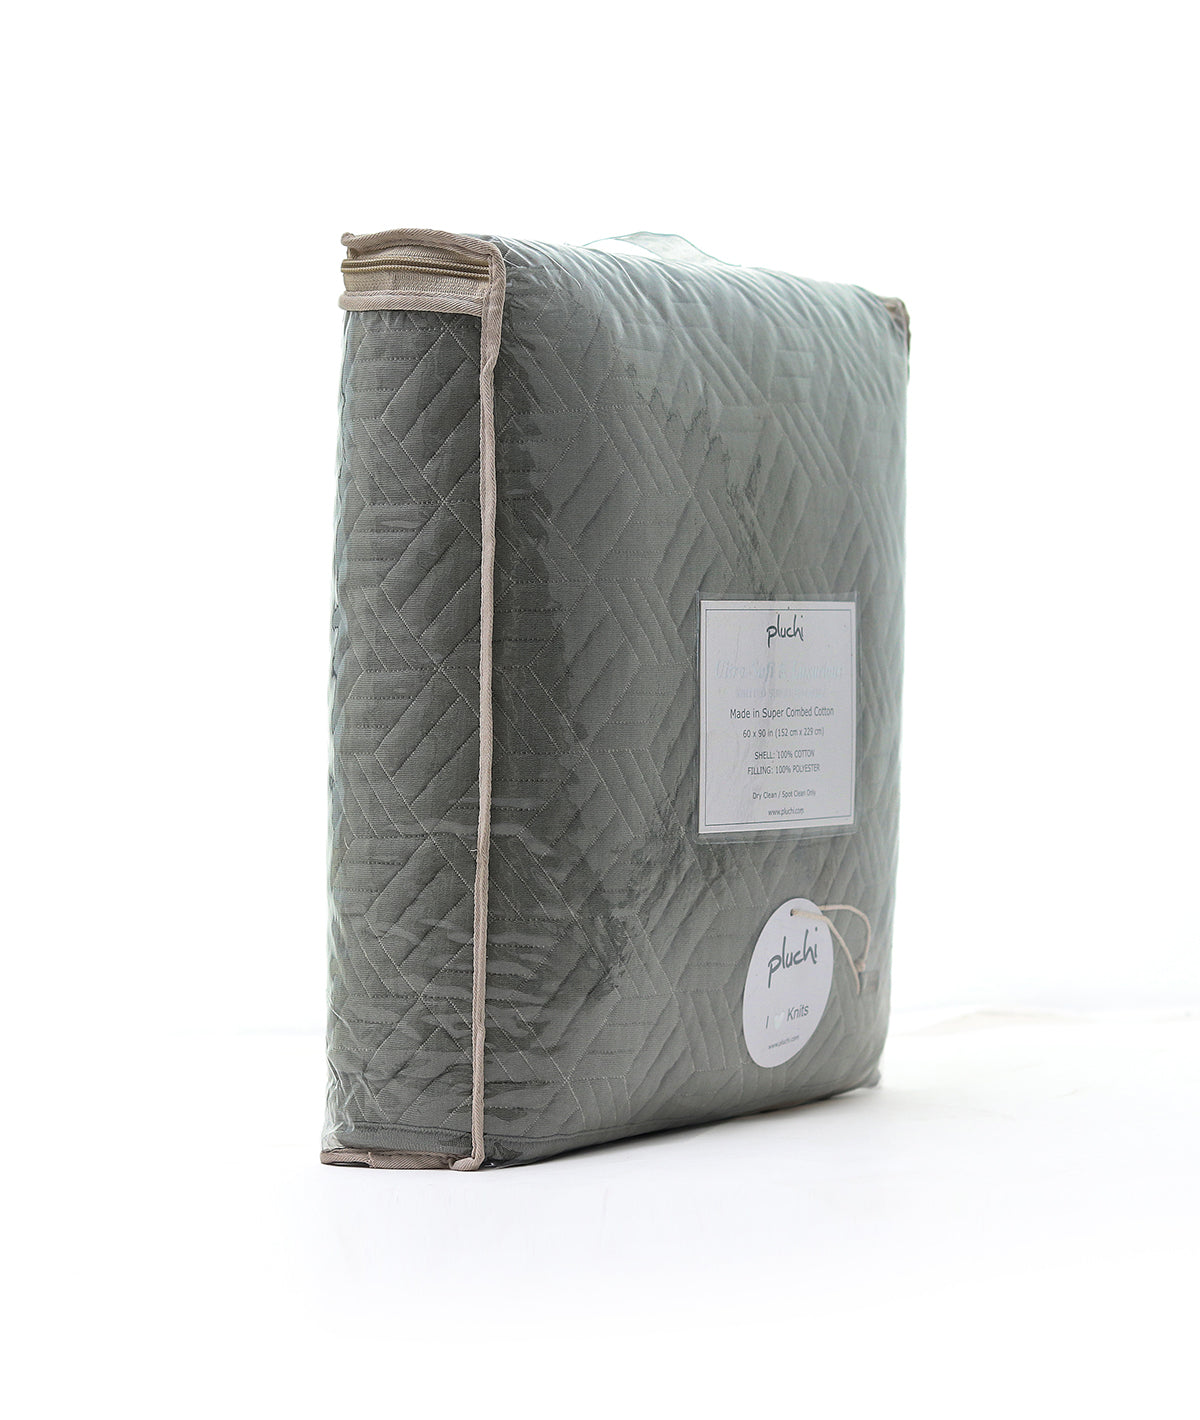 3D Cubic Single Bed Quilted Blanket (Ryegrass & Natural Melange)(152cm x 228cm)